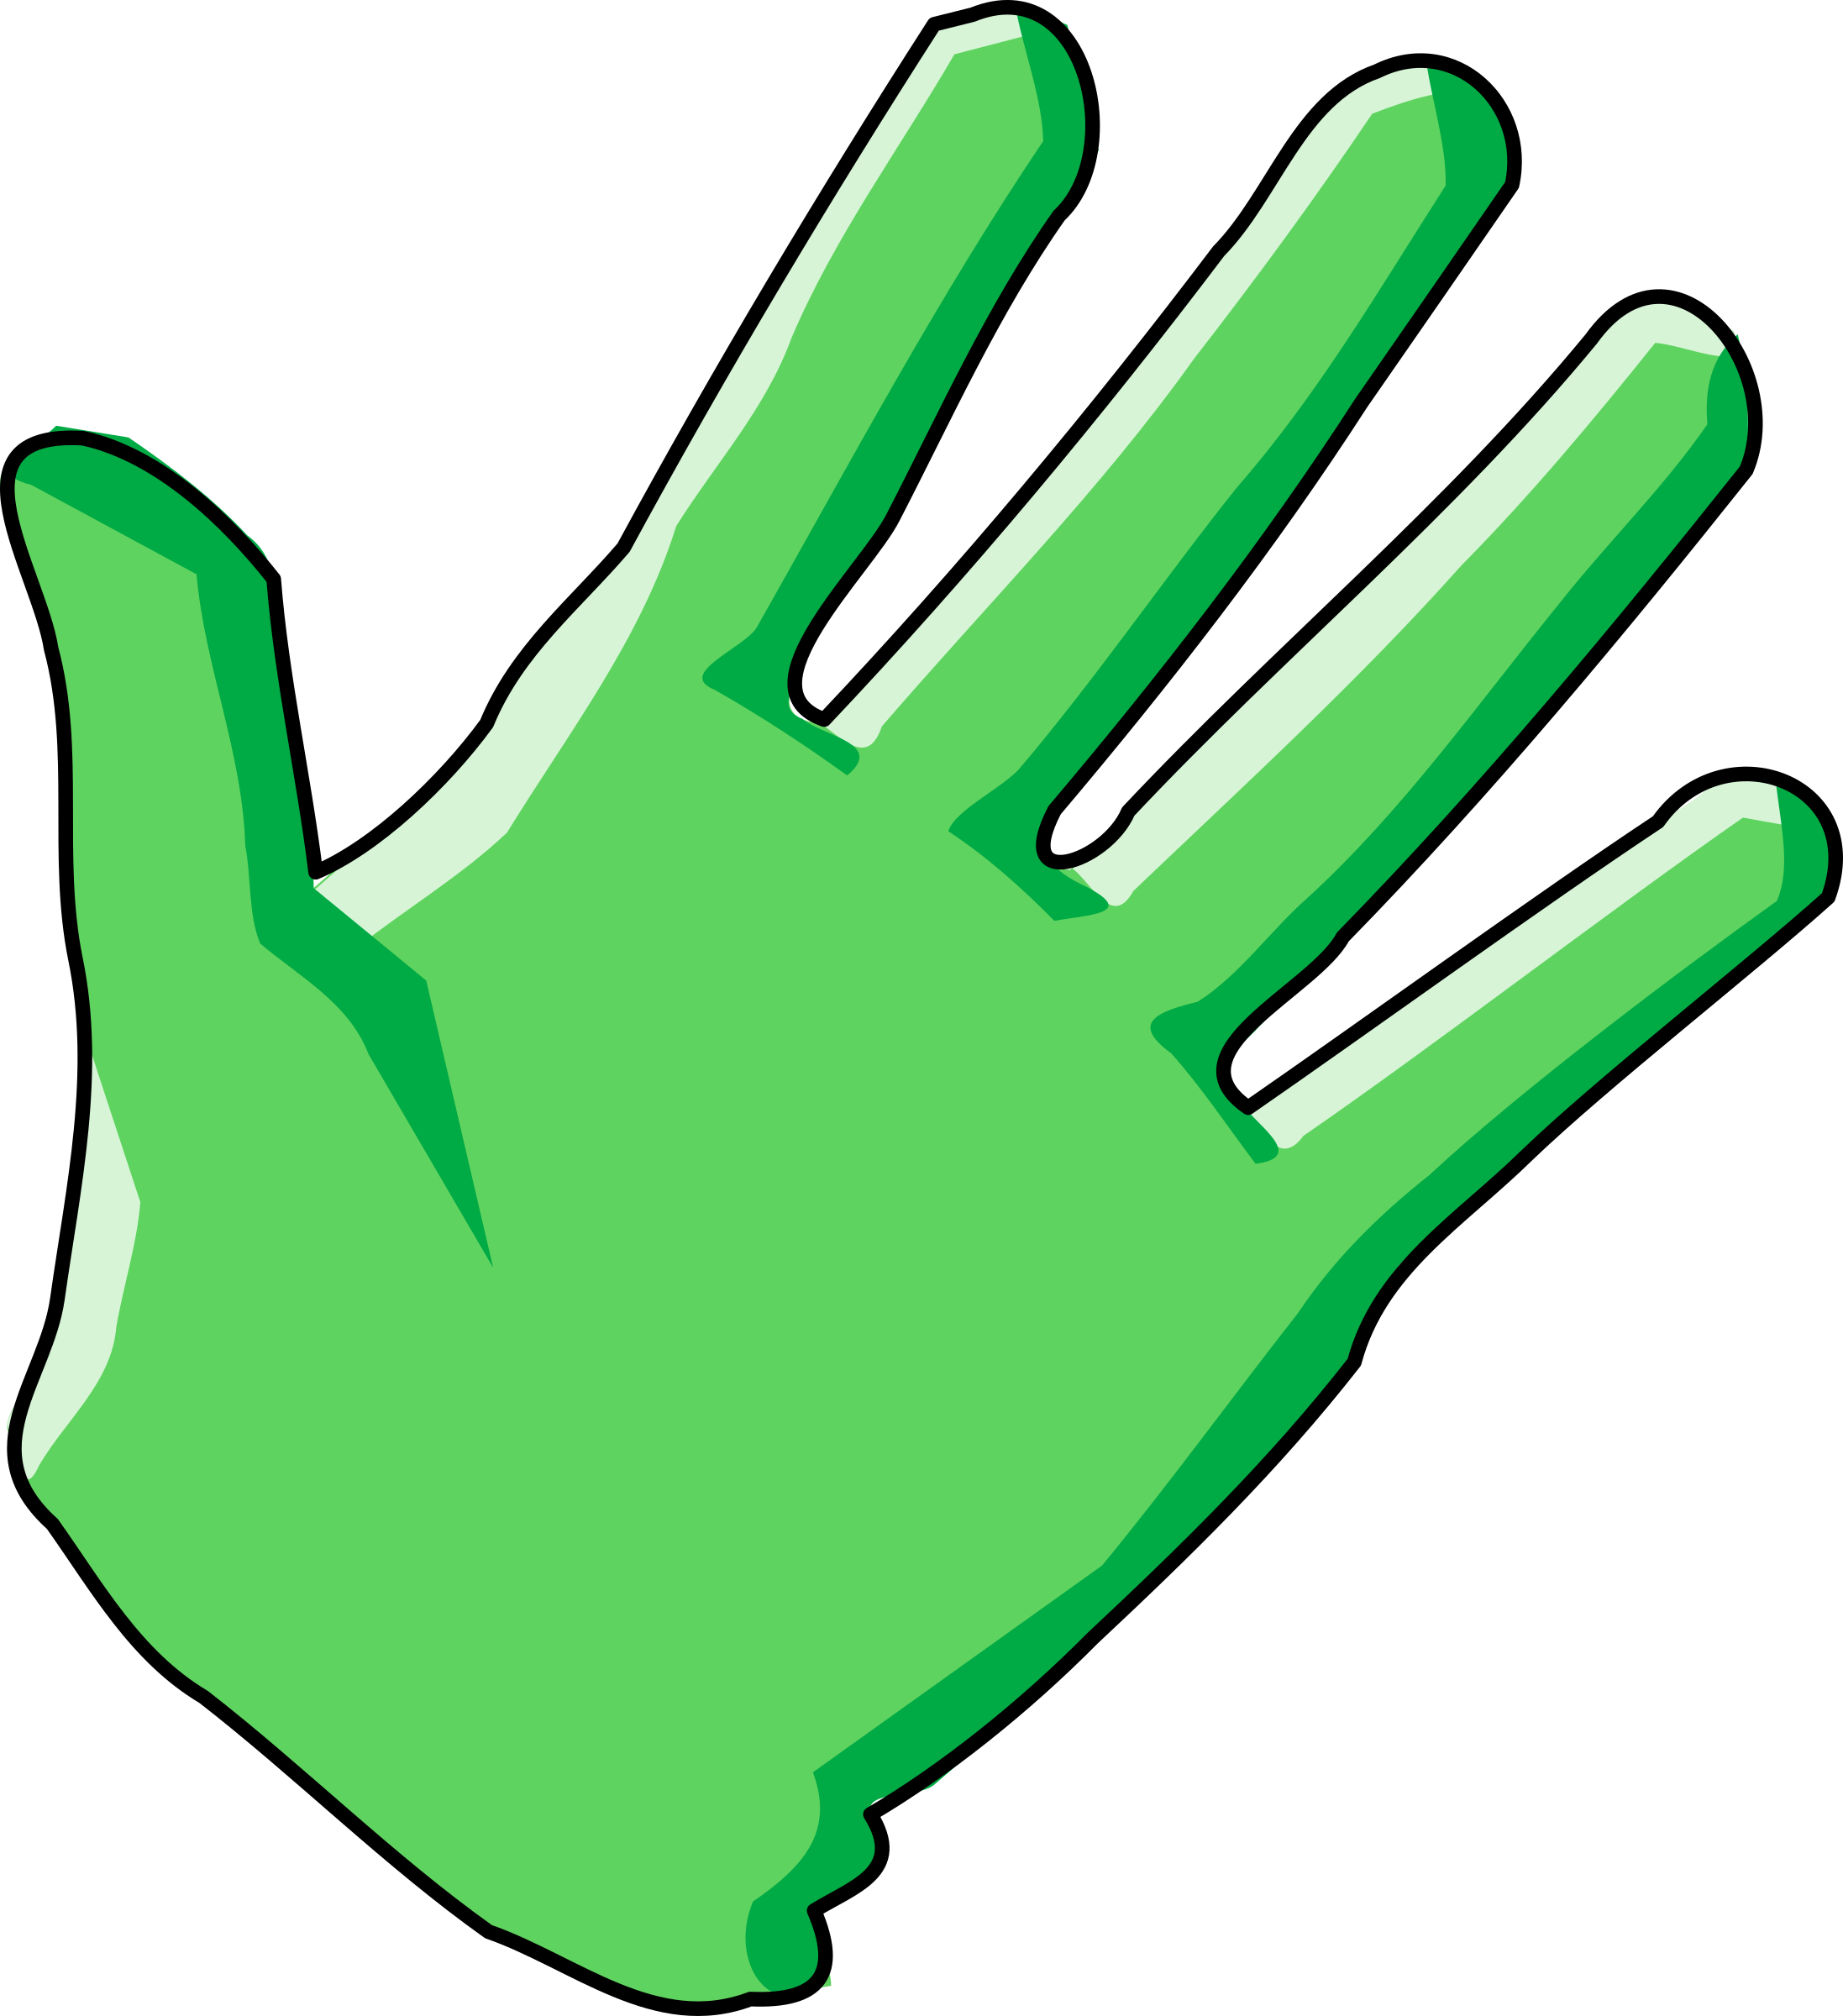 Правая рука зеленая. Зеленые ладошки. Ладонь. Ладошка зеленого цвета. Рука мультяшная.